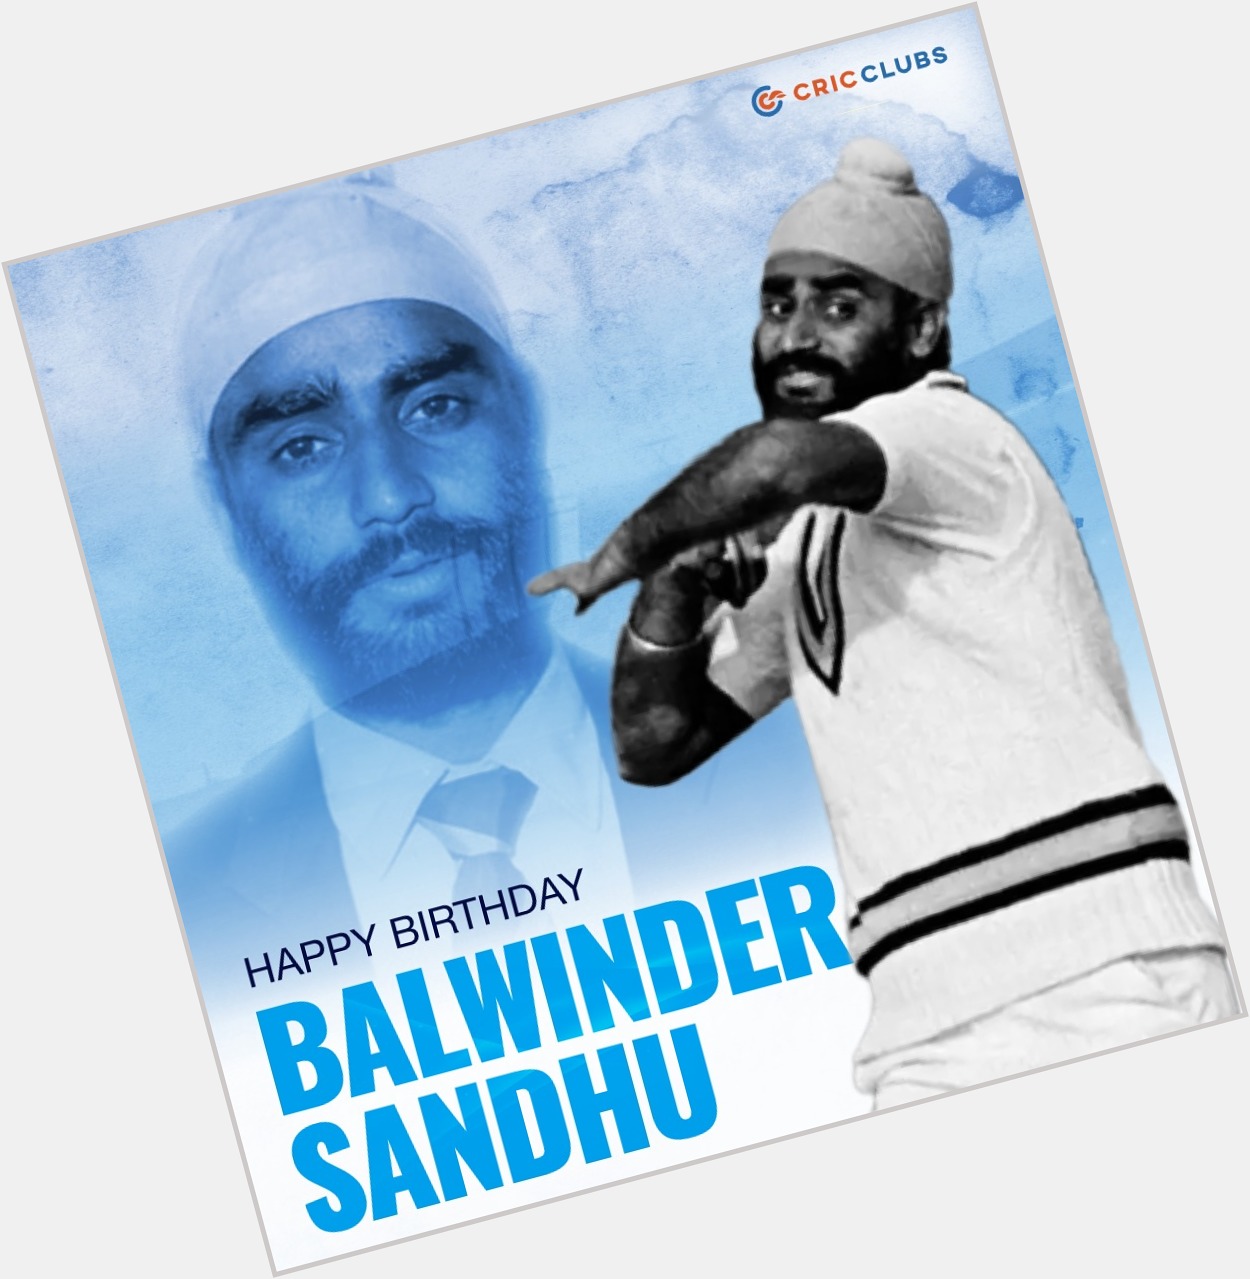 Wishing Balwinder Sandhu a happy birthday!    